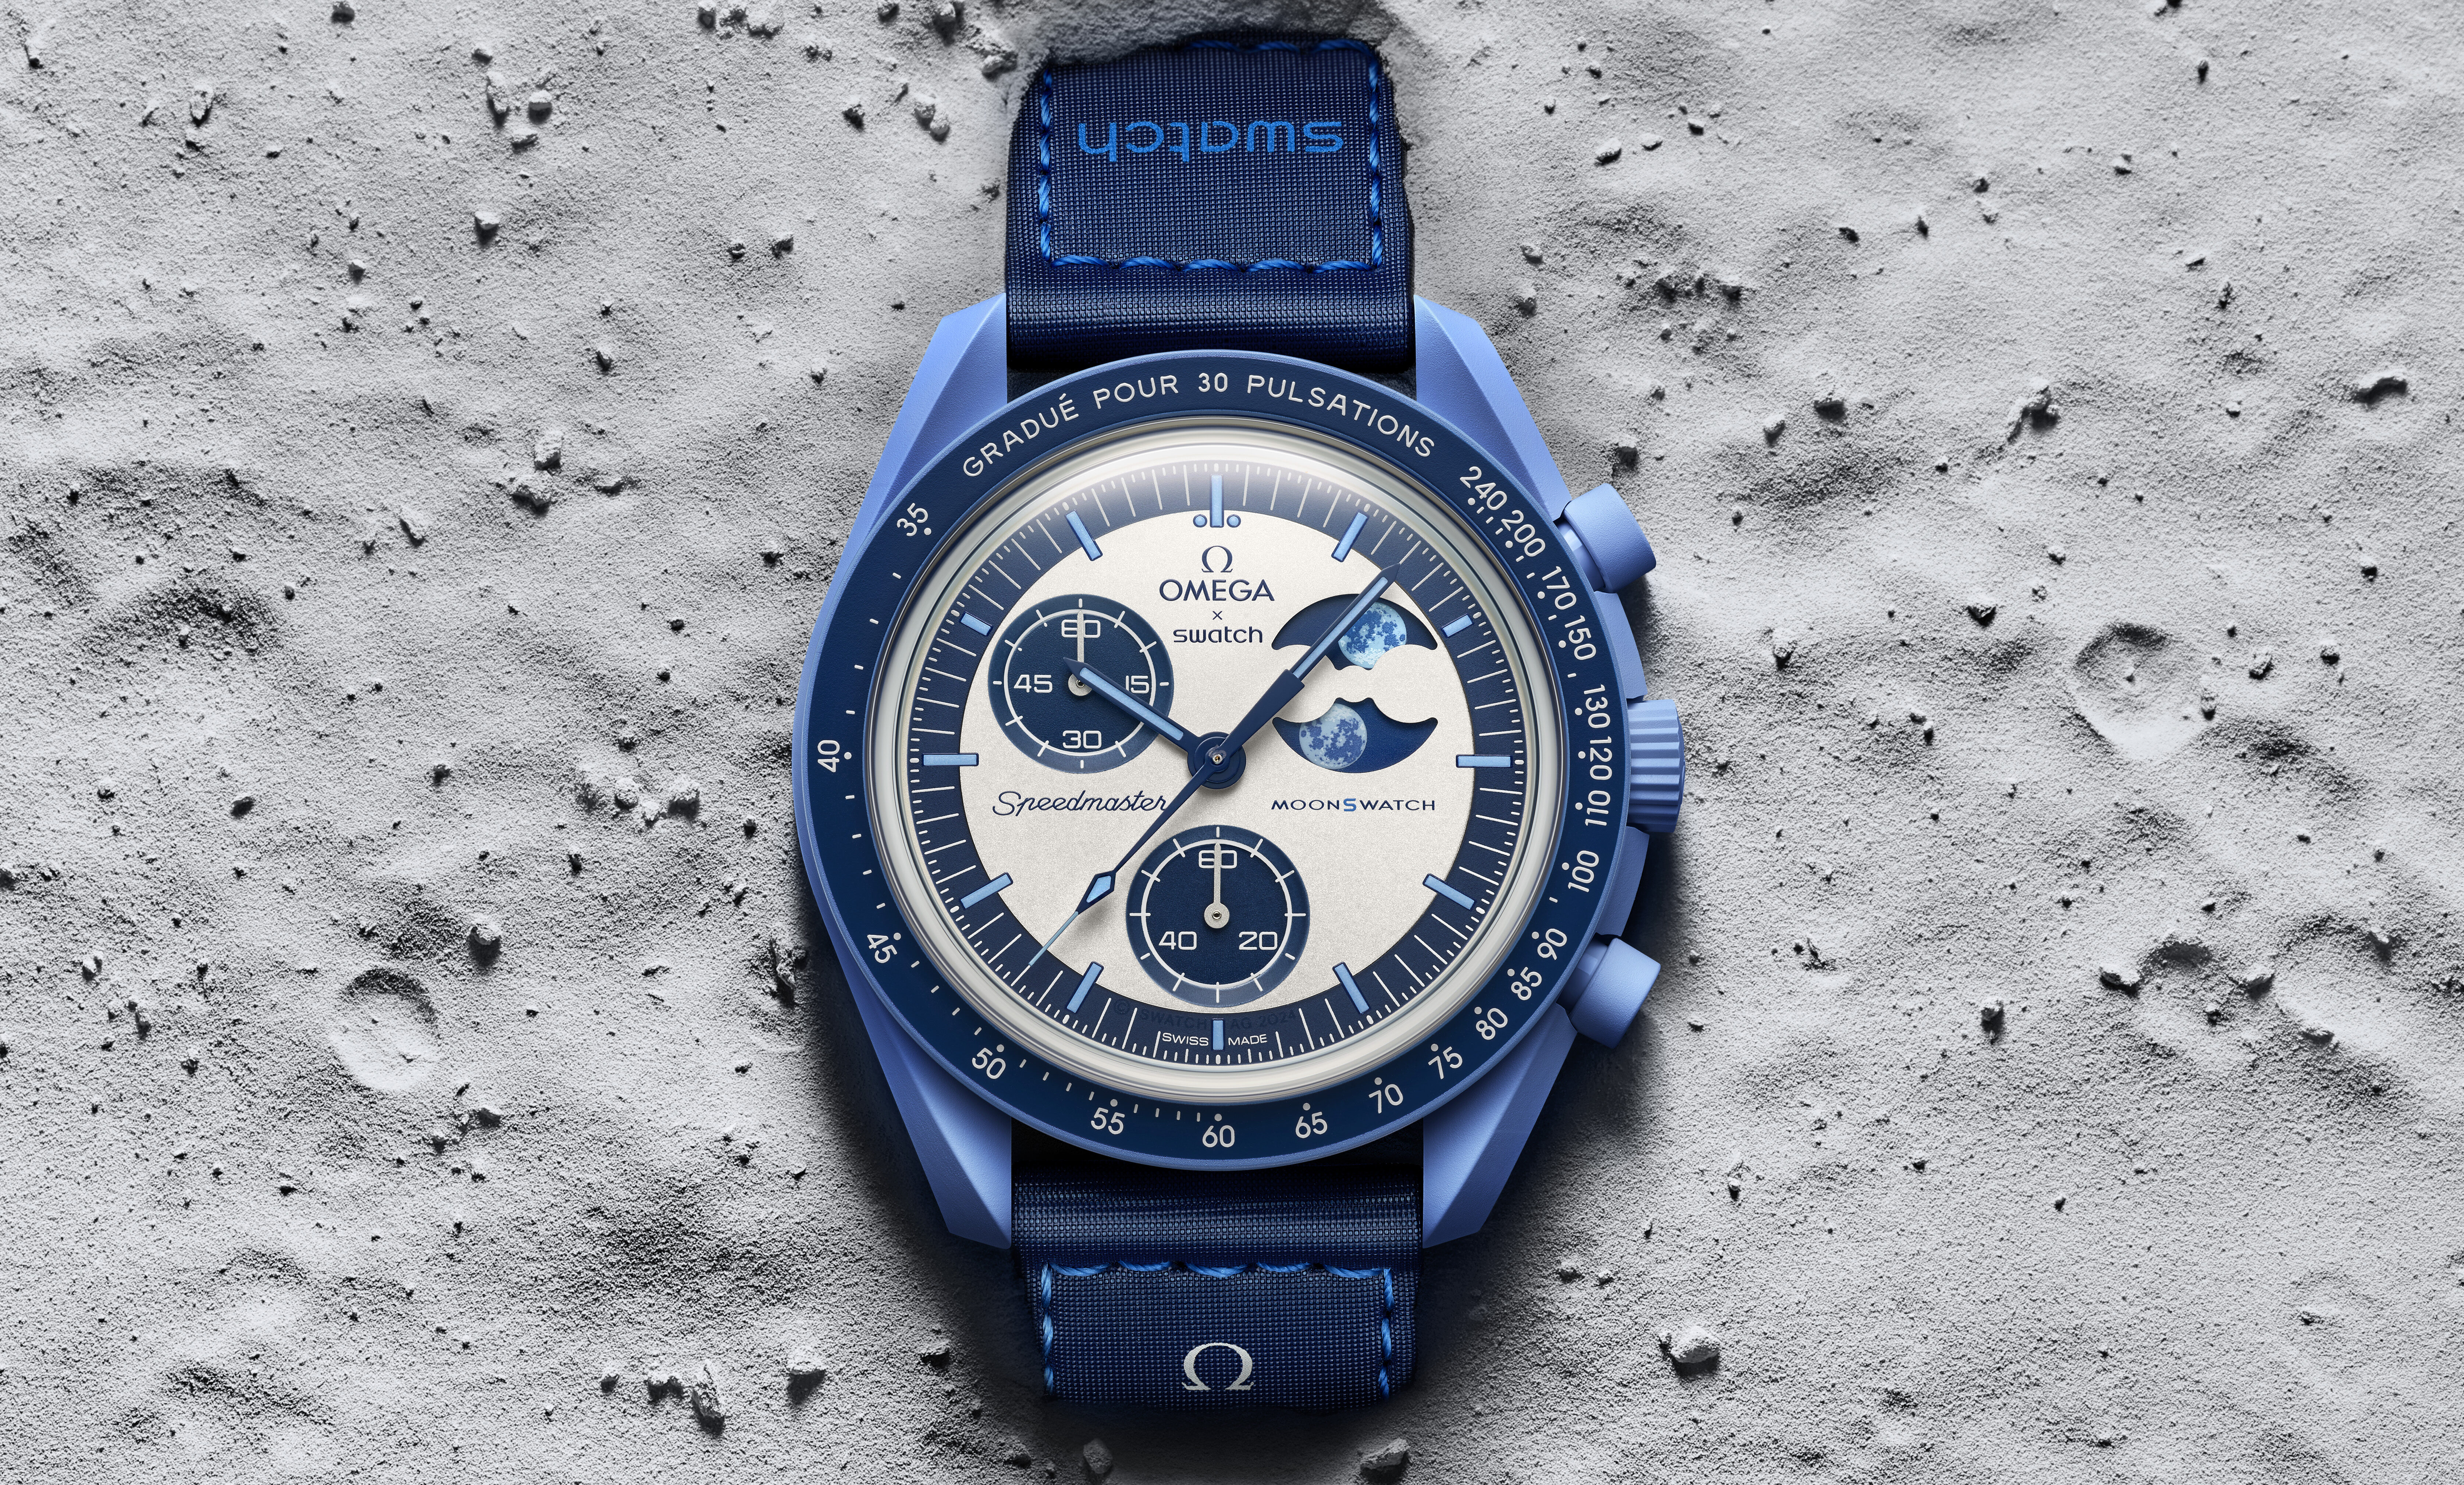 OMEGA x Swatch 全新 Bioceramic MoonSwatch 系列腕表 MISSION TO THE SUPER BLUE MOONPHASE 登场